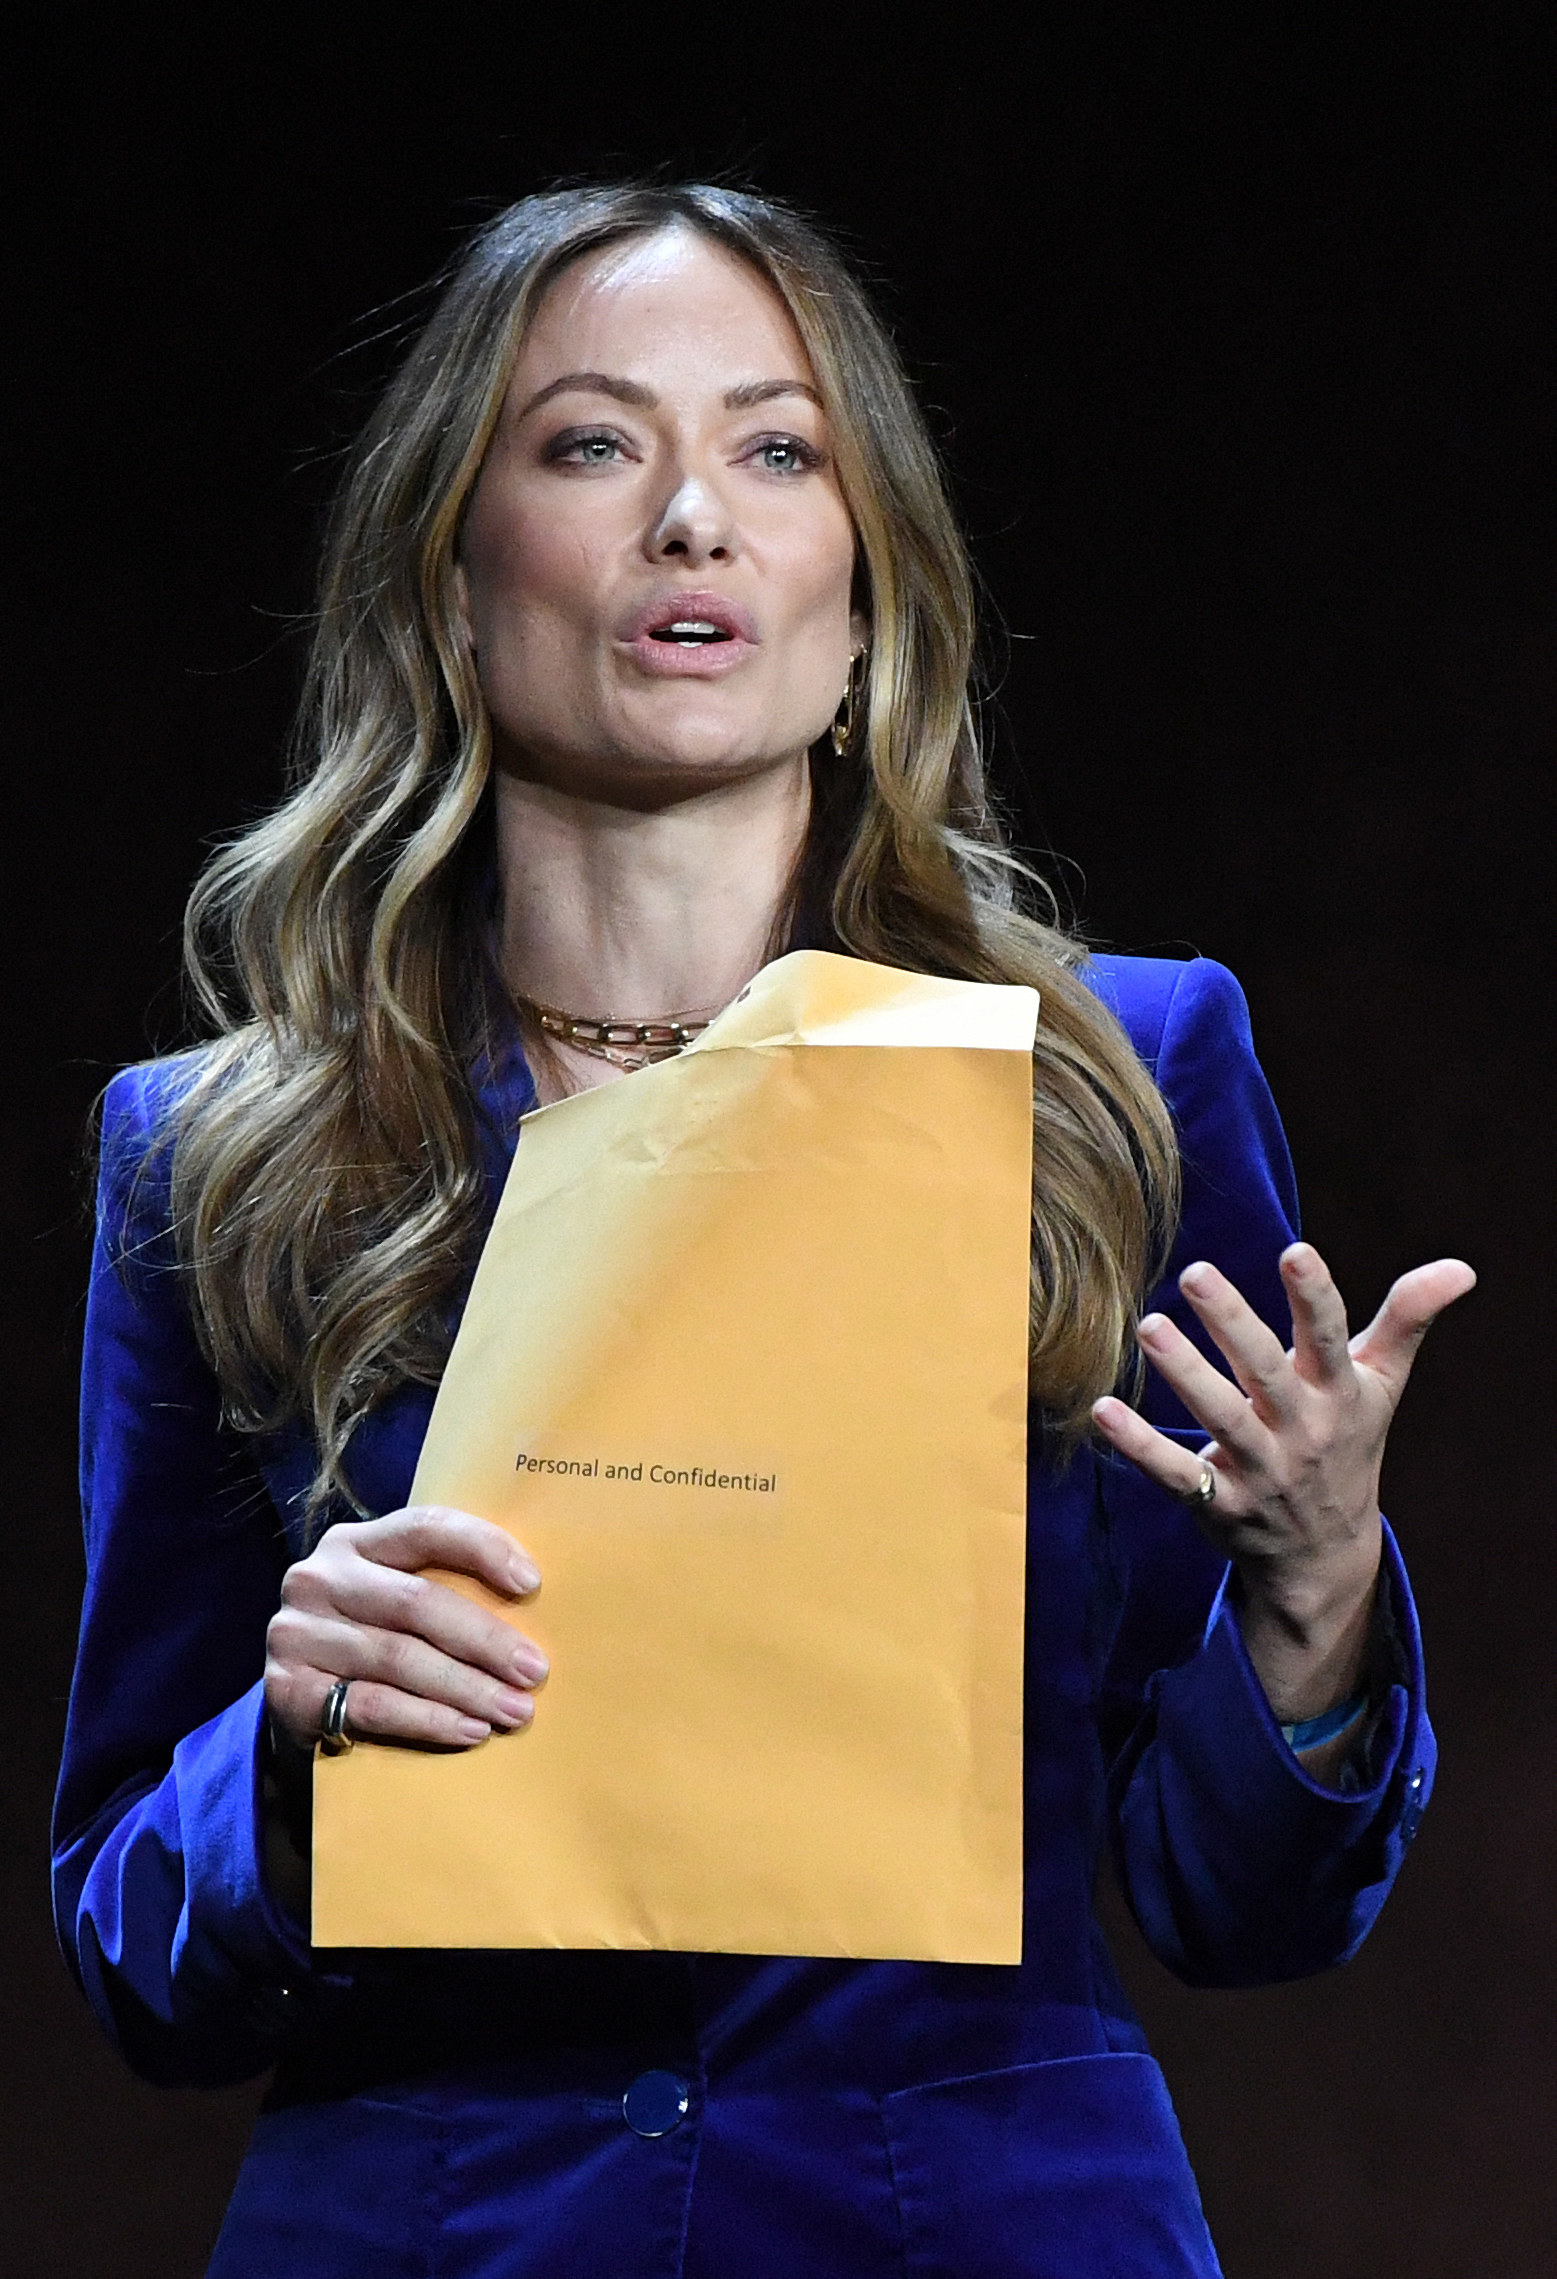 Olivia speaks while holding an envelope